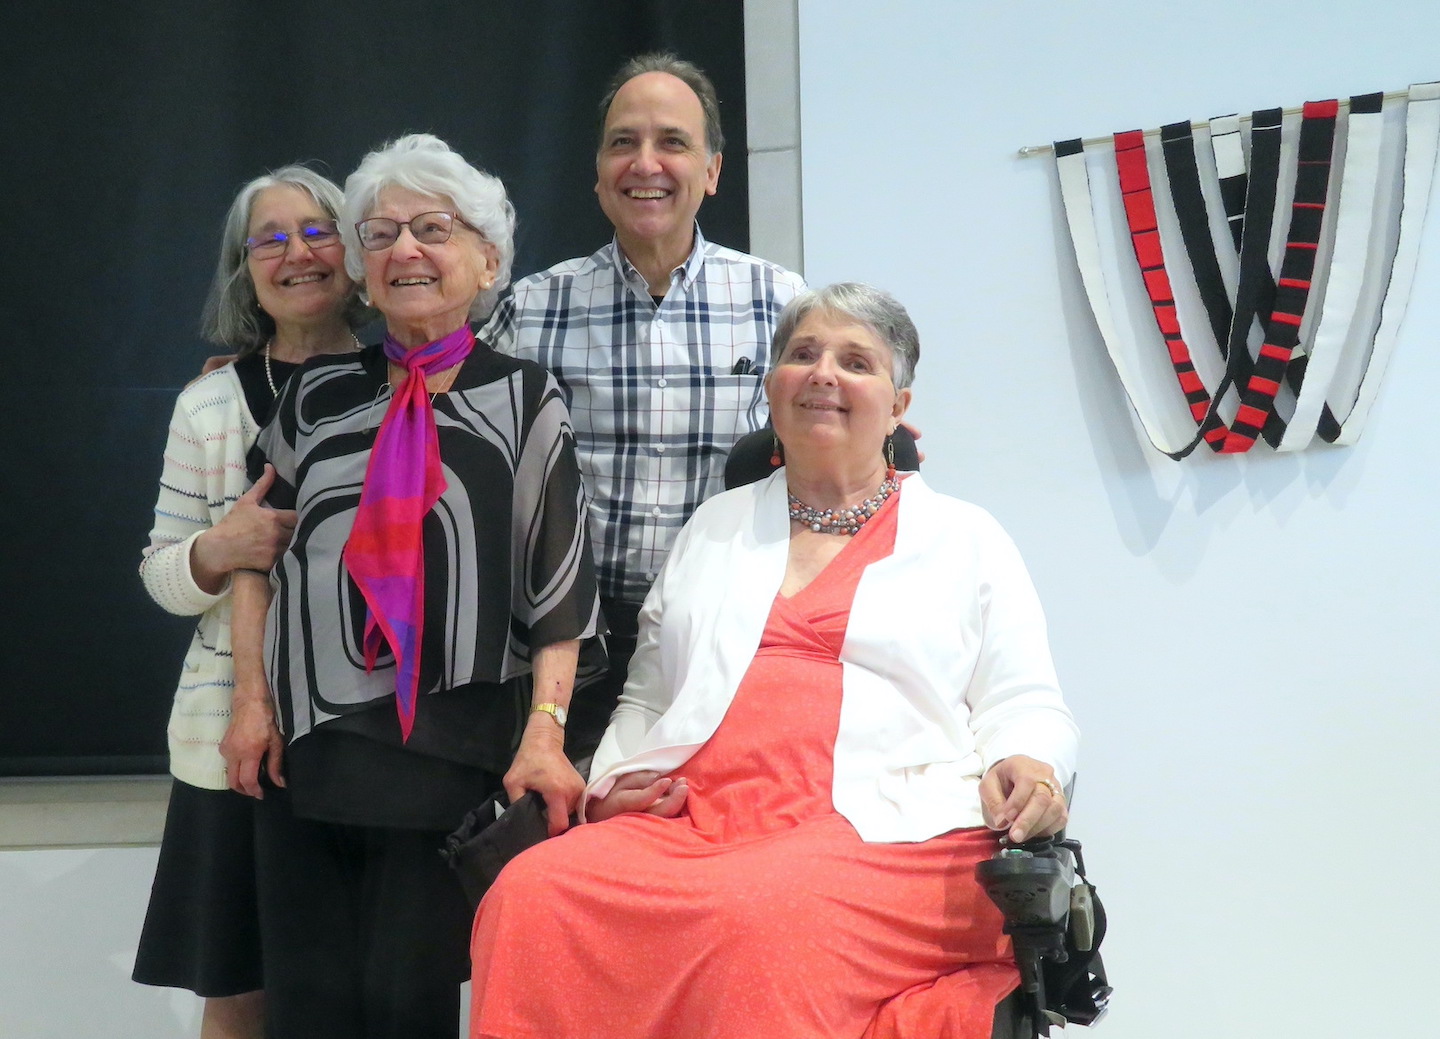 Lenore Tetkowski celebrates her 100th birthday at the Burchfield-Penney Art Center with family and friends. Pictured are Tetkowski and her three children: Neil Tetkowski, Diane Pokorski and Mira Berkley.